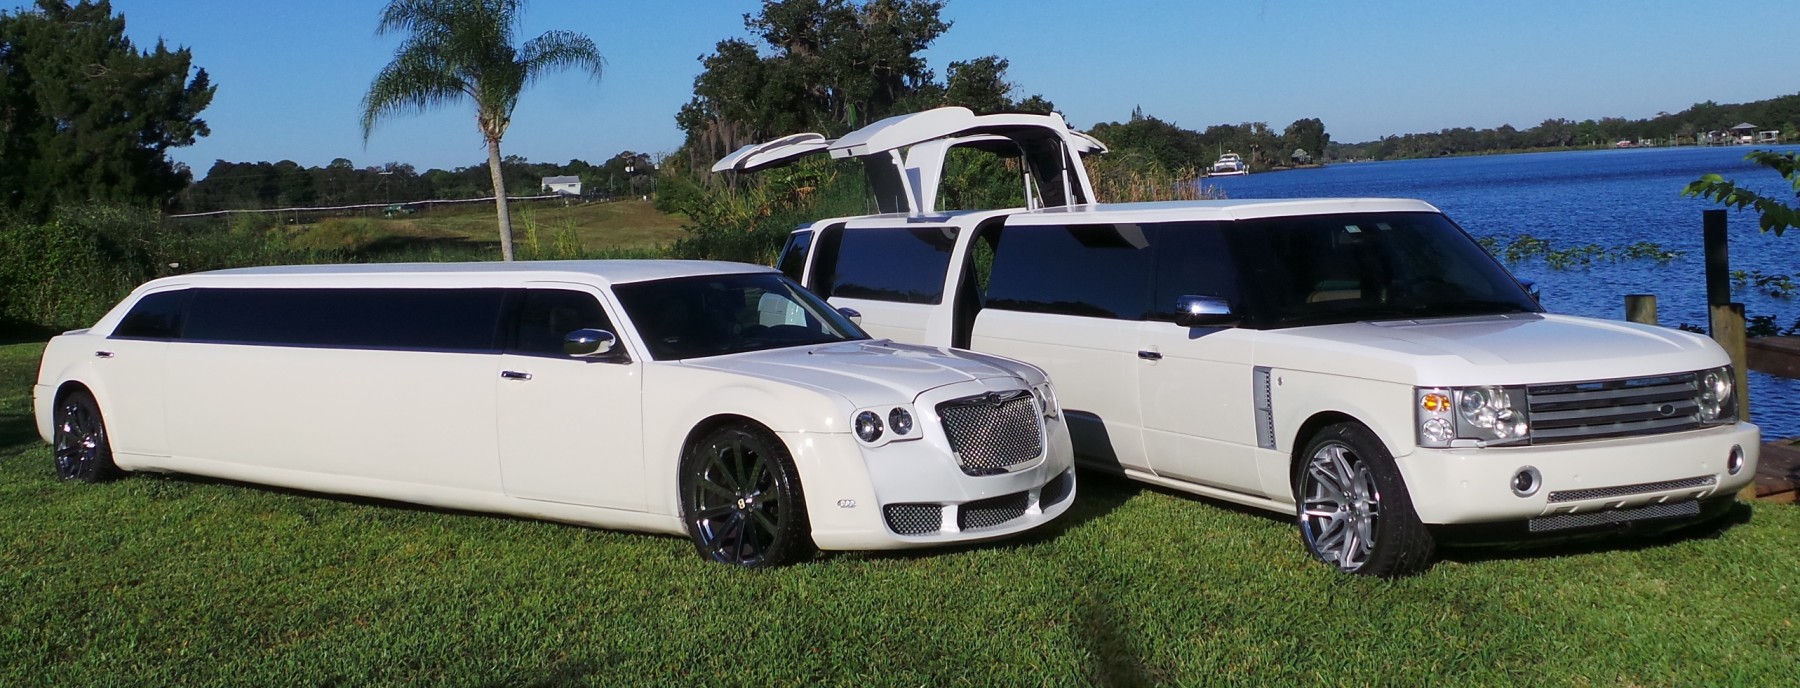 White Bentley and Range Rover Florida